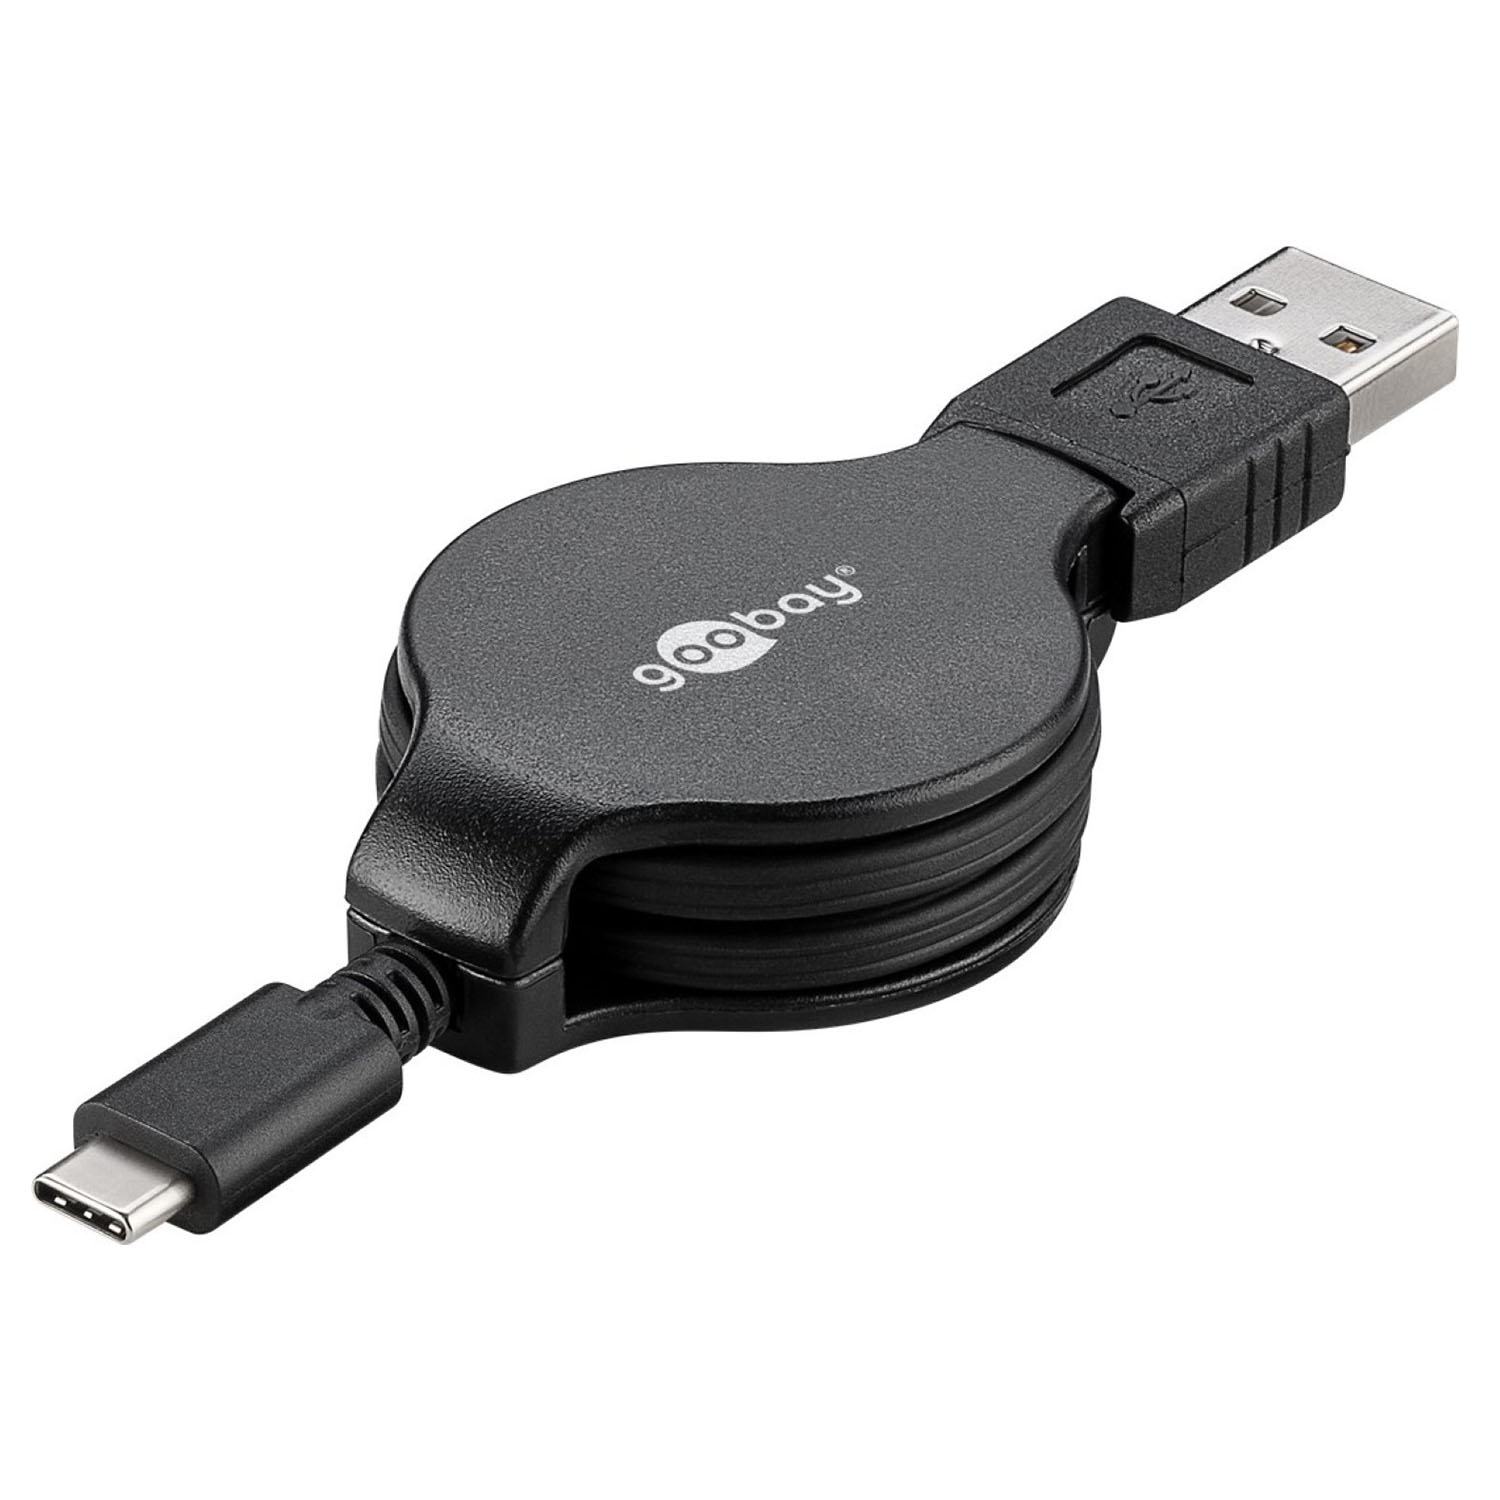 GOOBAY Lade-/Datenkabel ausziehbar USB C Kabel schwarz Datenkabel, Ladekabel